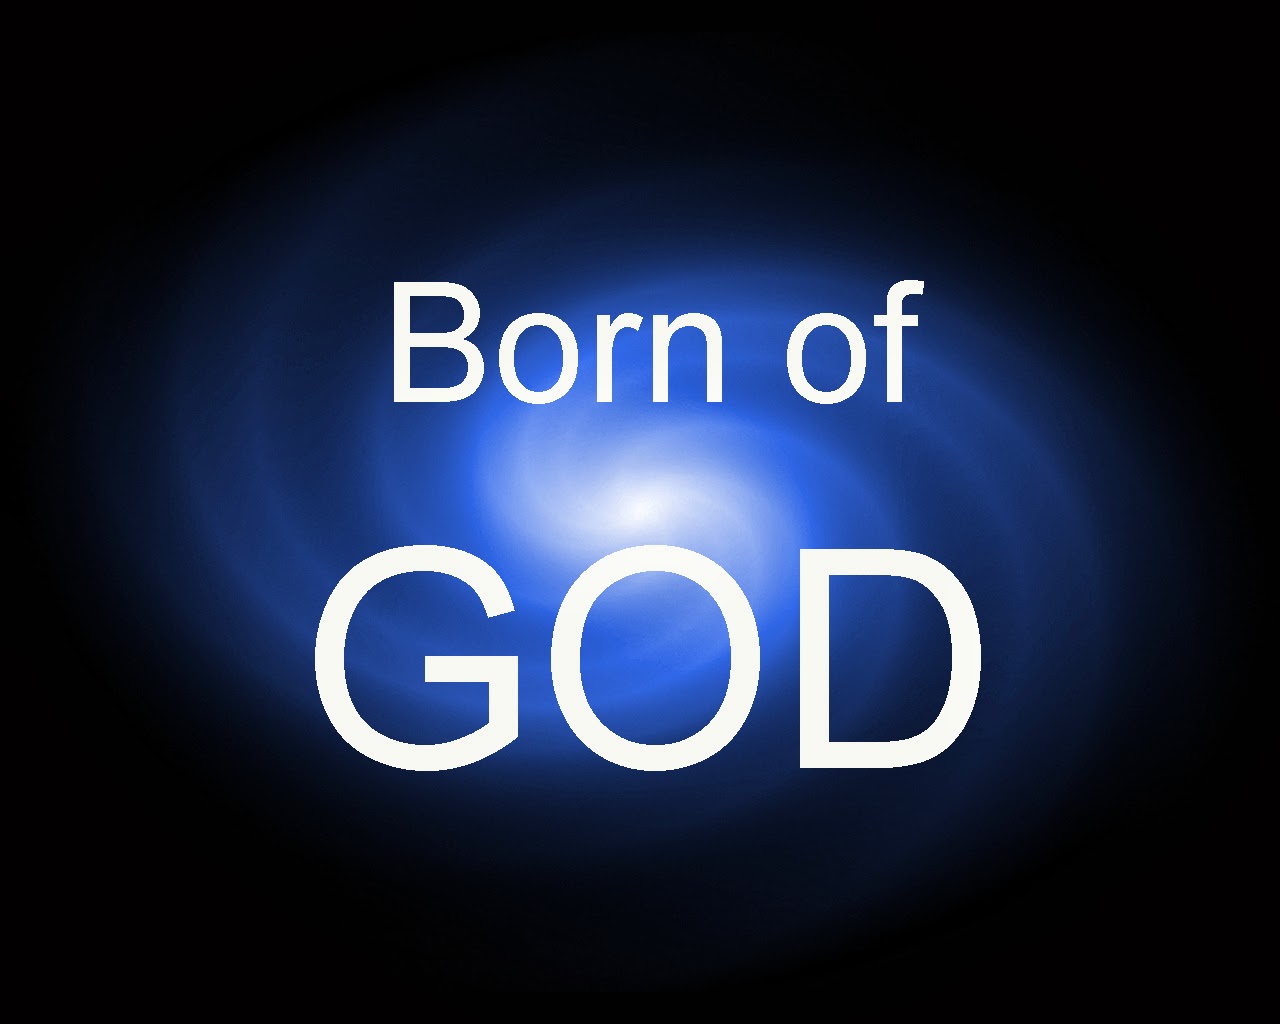 God is life. Be born.